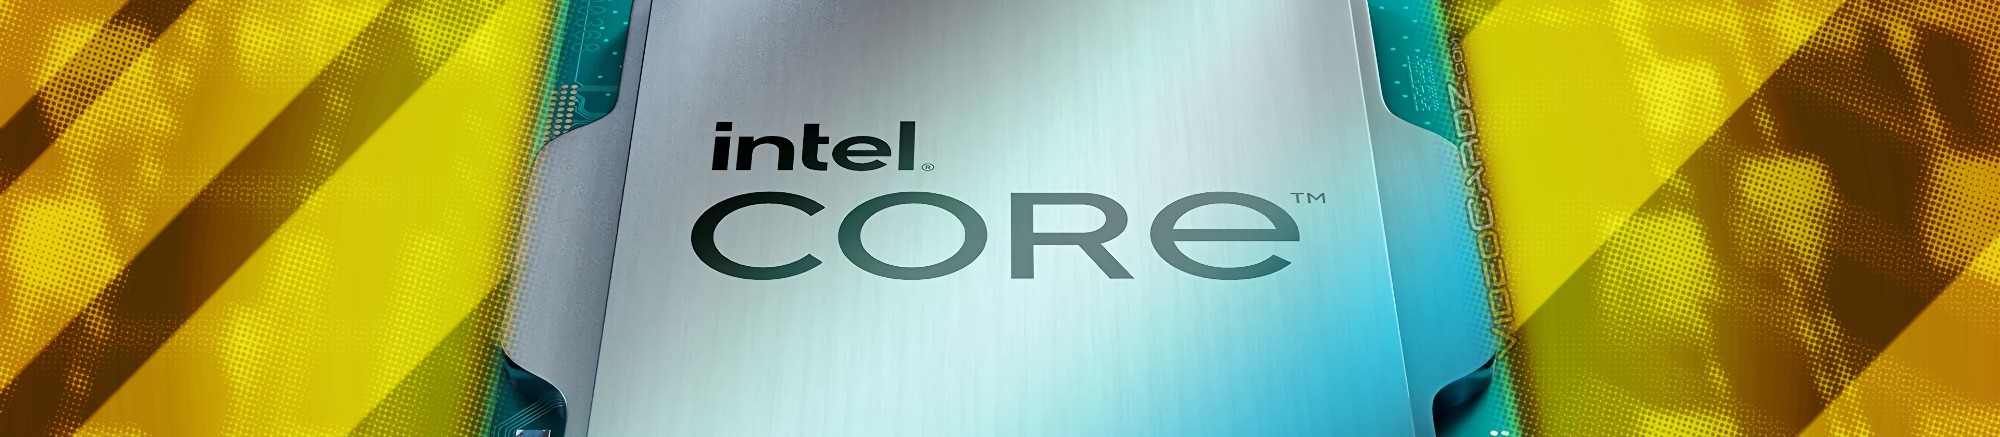 Intel-Core-HERO-BANNER.jpg